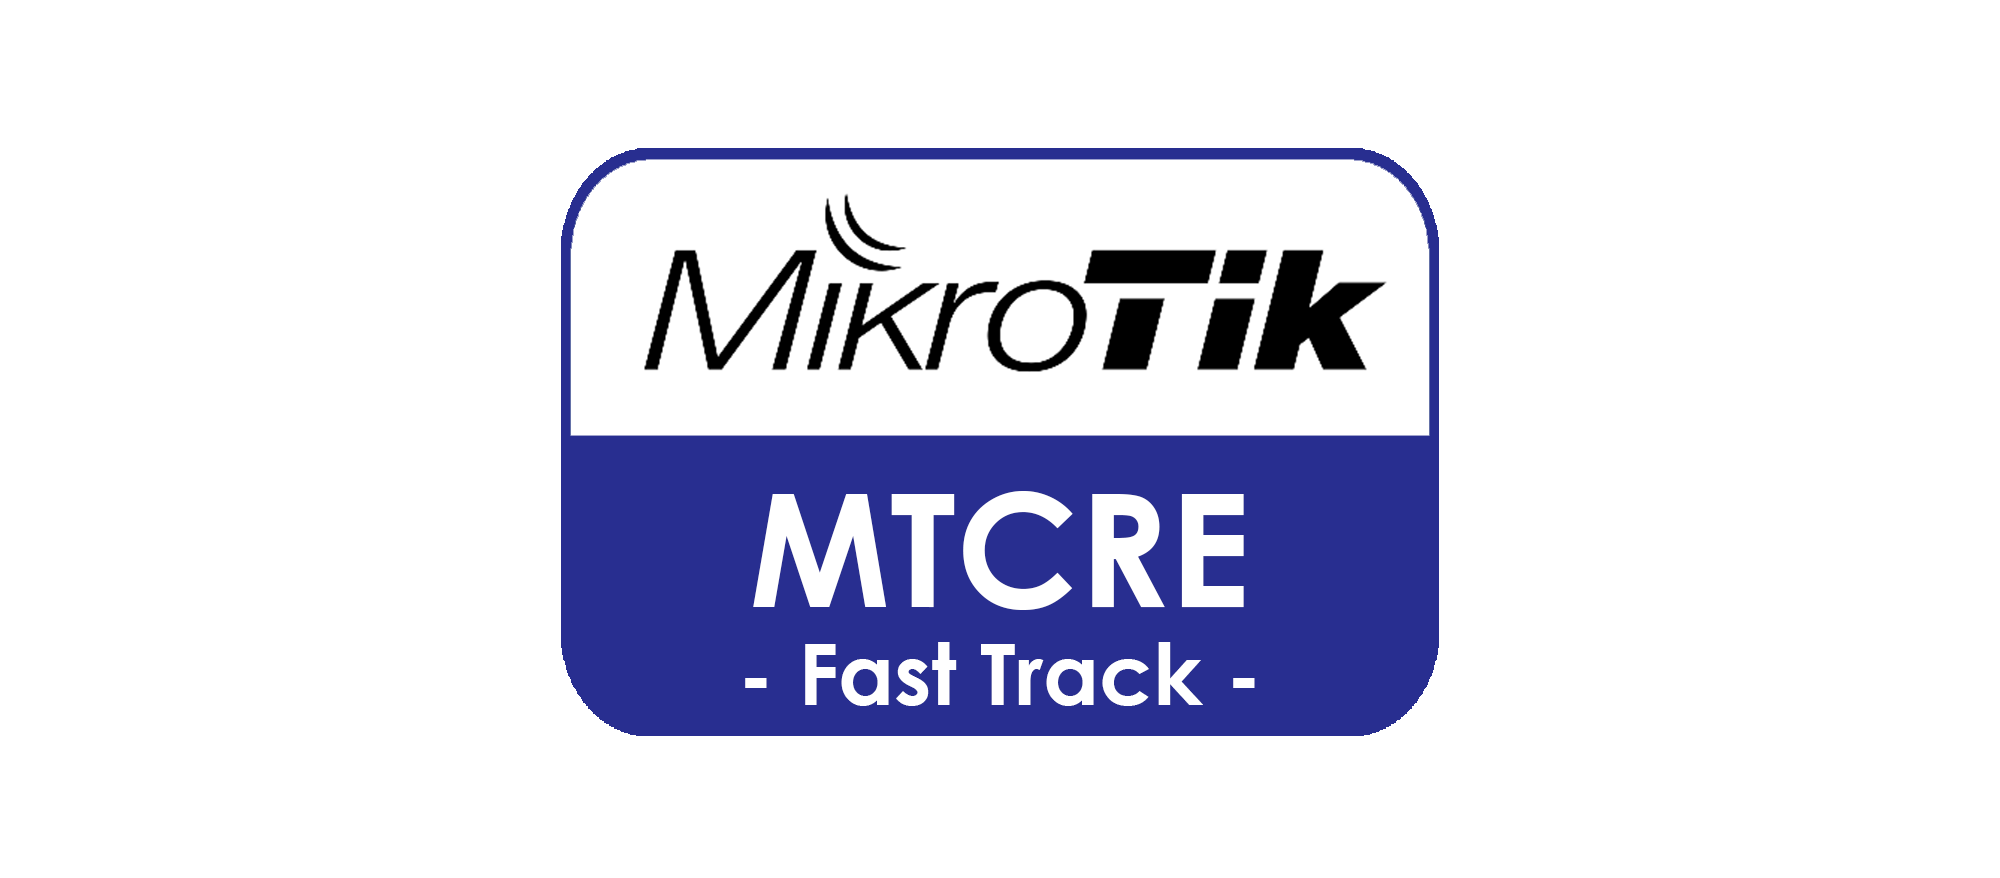 MTCRE Fast Track! 12-13 марта, г. Ужгород